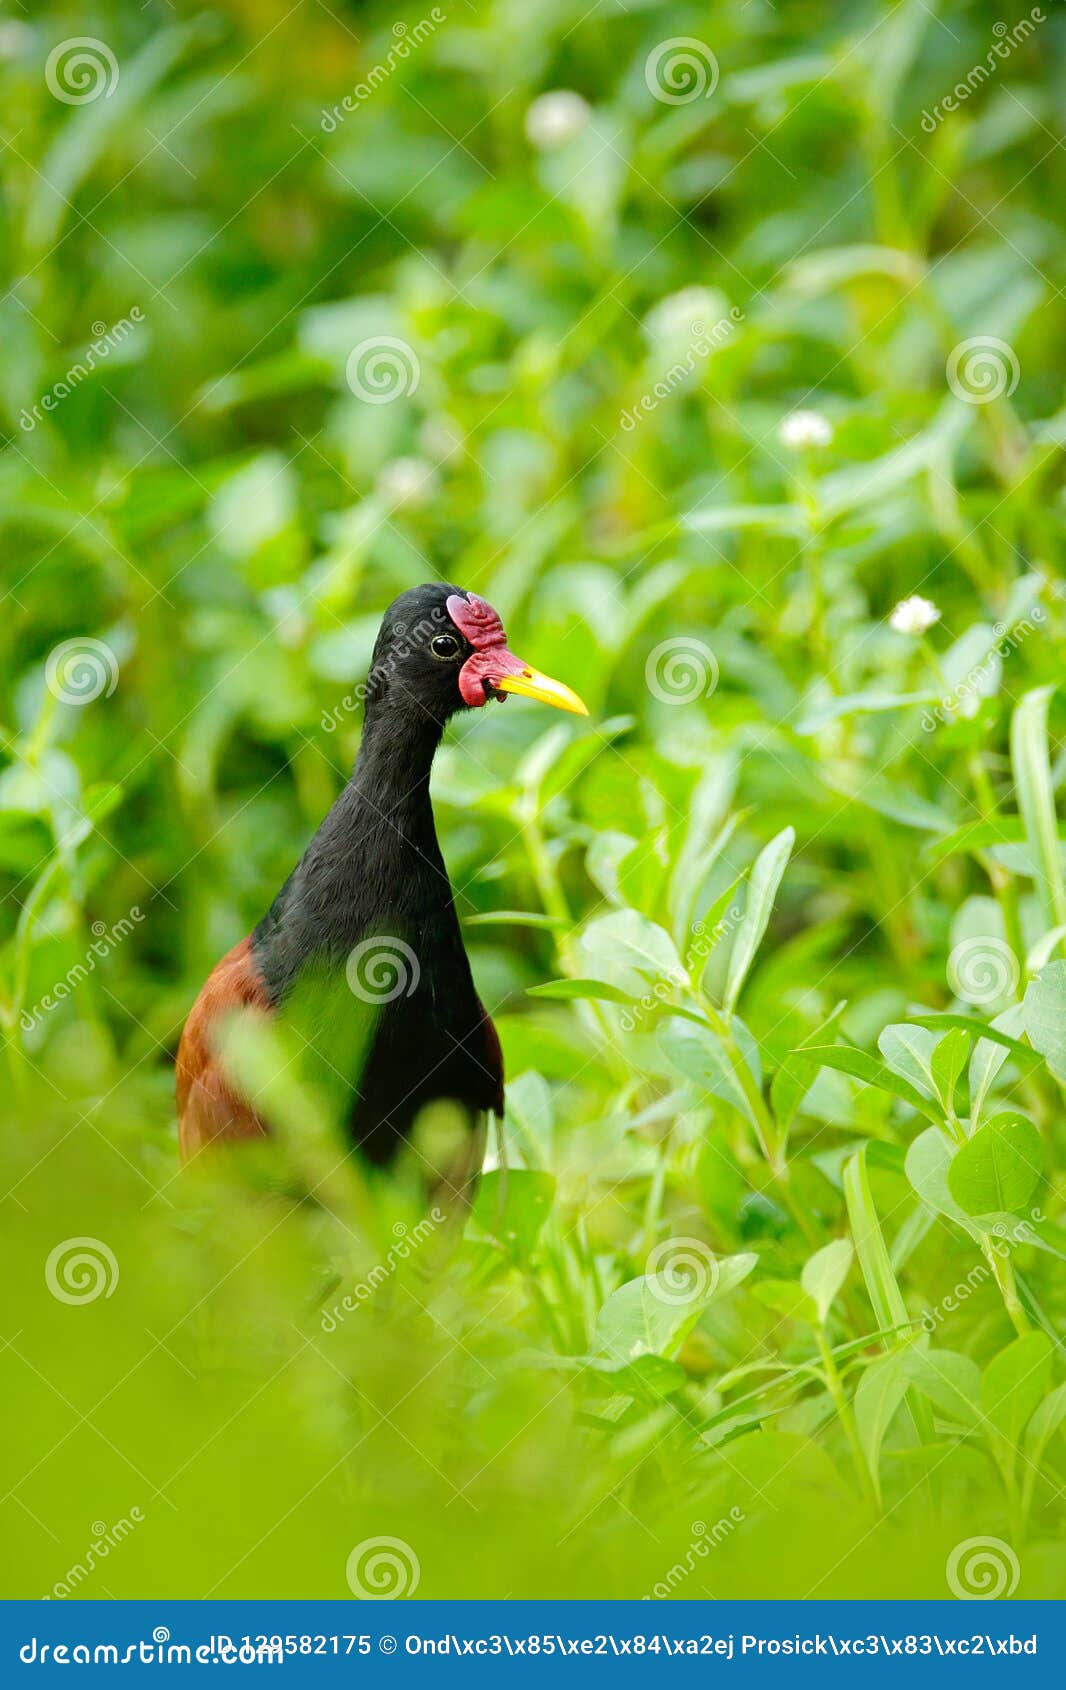 wattled jacana, wader bird from trinidad and tobago. bird with long leg in the water grass. jacana in habitat, green vegetation.